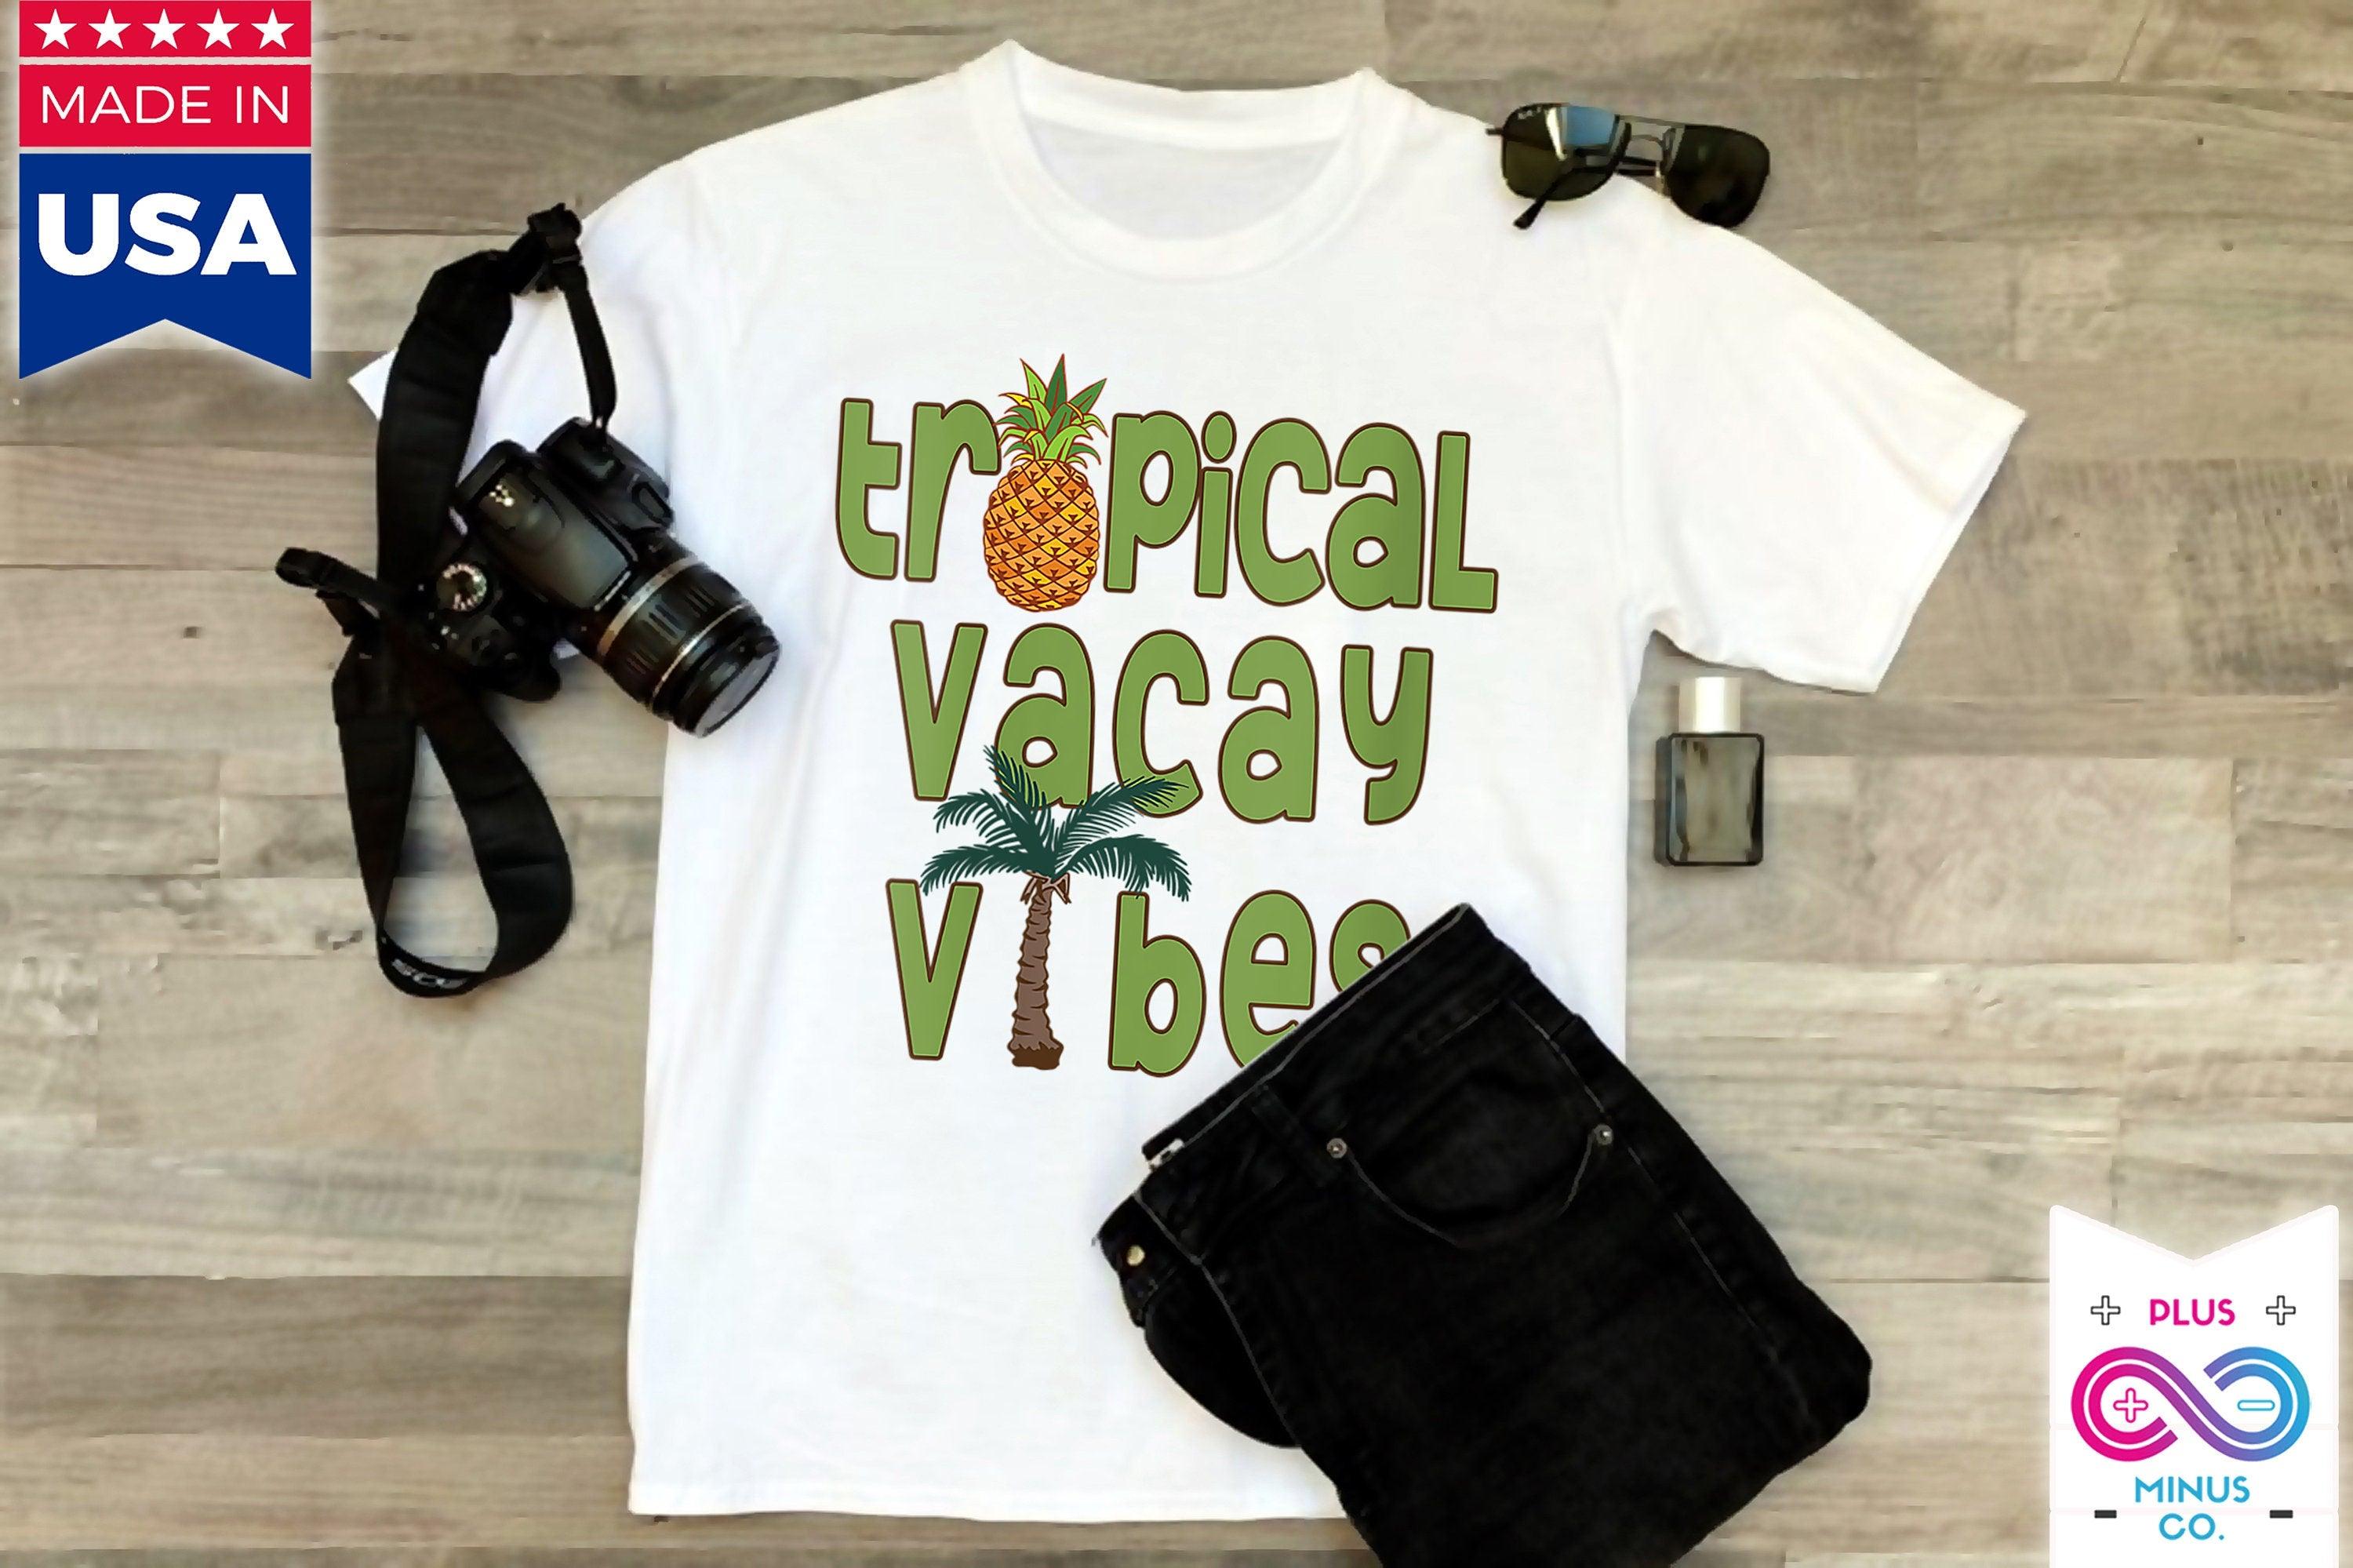 Tropical Vacay Vibes T-shirt, Pineapple Palm Trees Retro Shirt, Vacay Vibes, Tropical Shirts, Travel Tee Shirts, Vacation Tees, Vacay Mode, - plusminusco.com